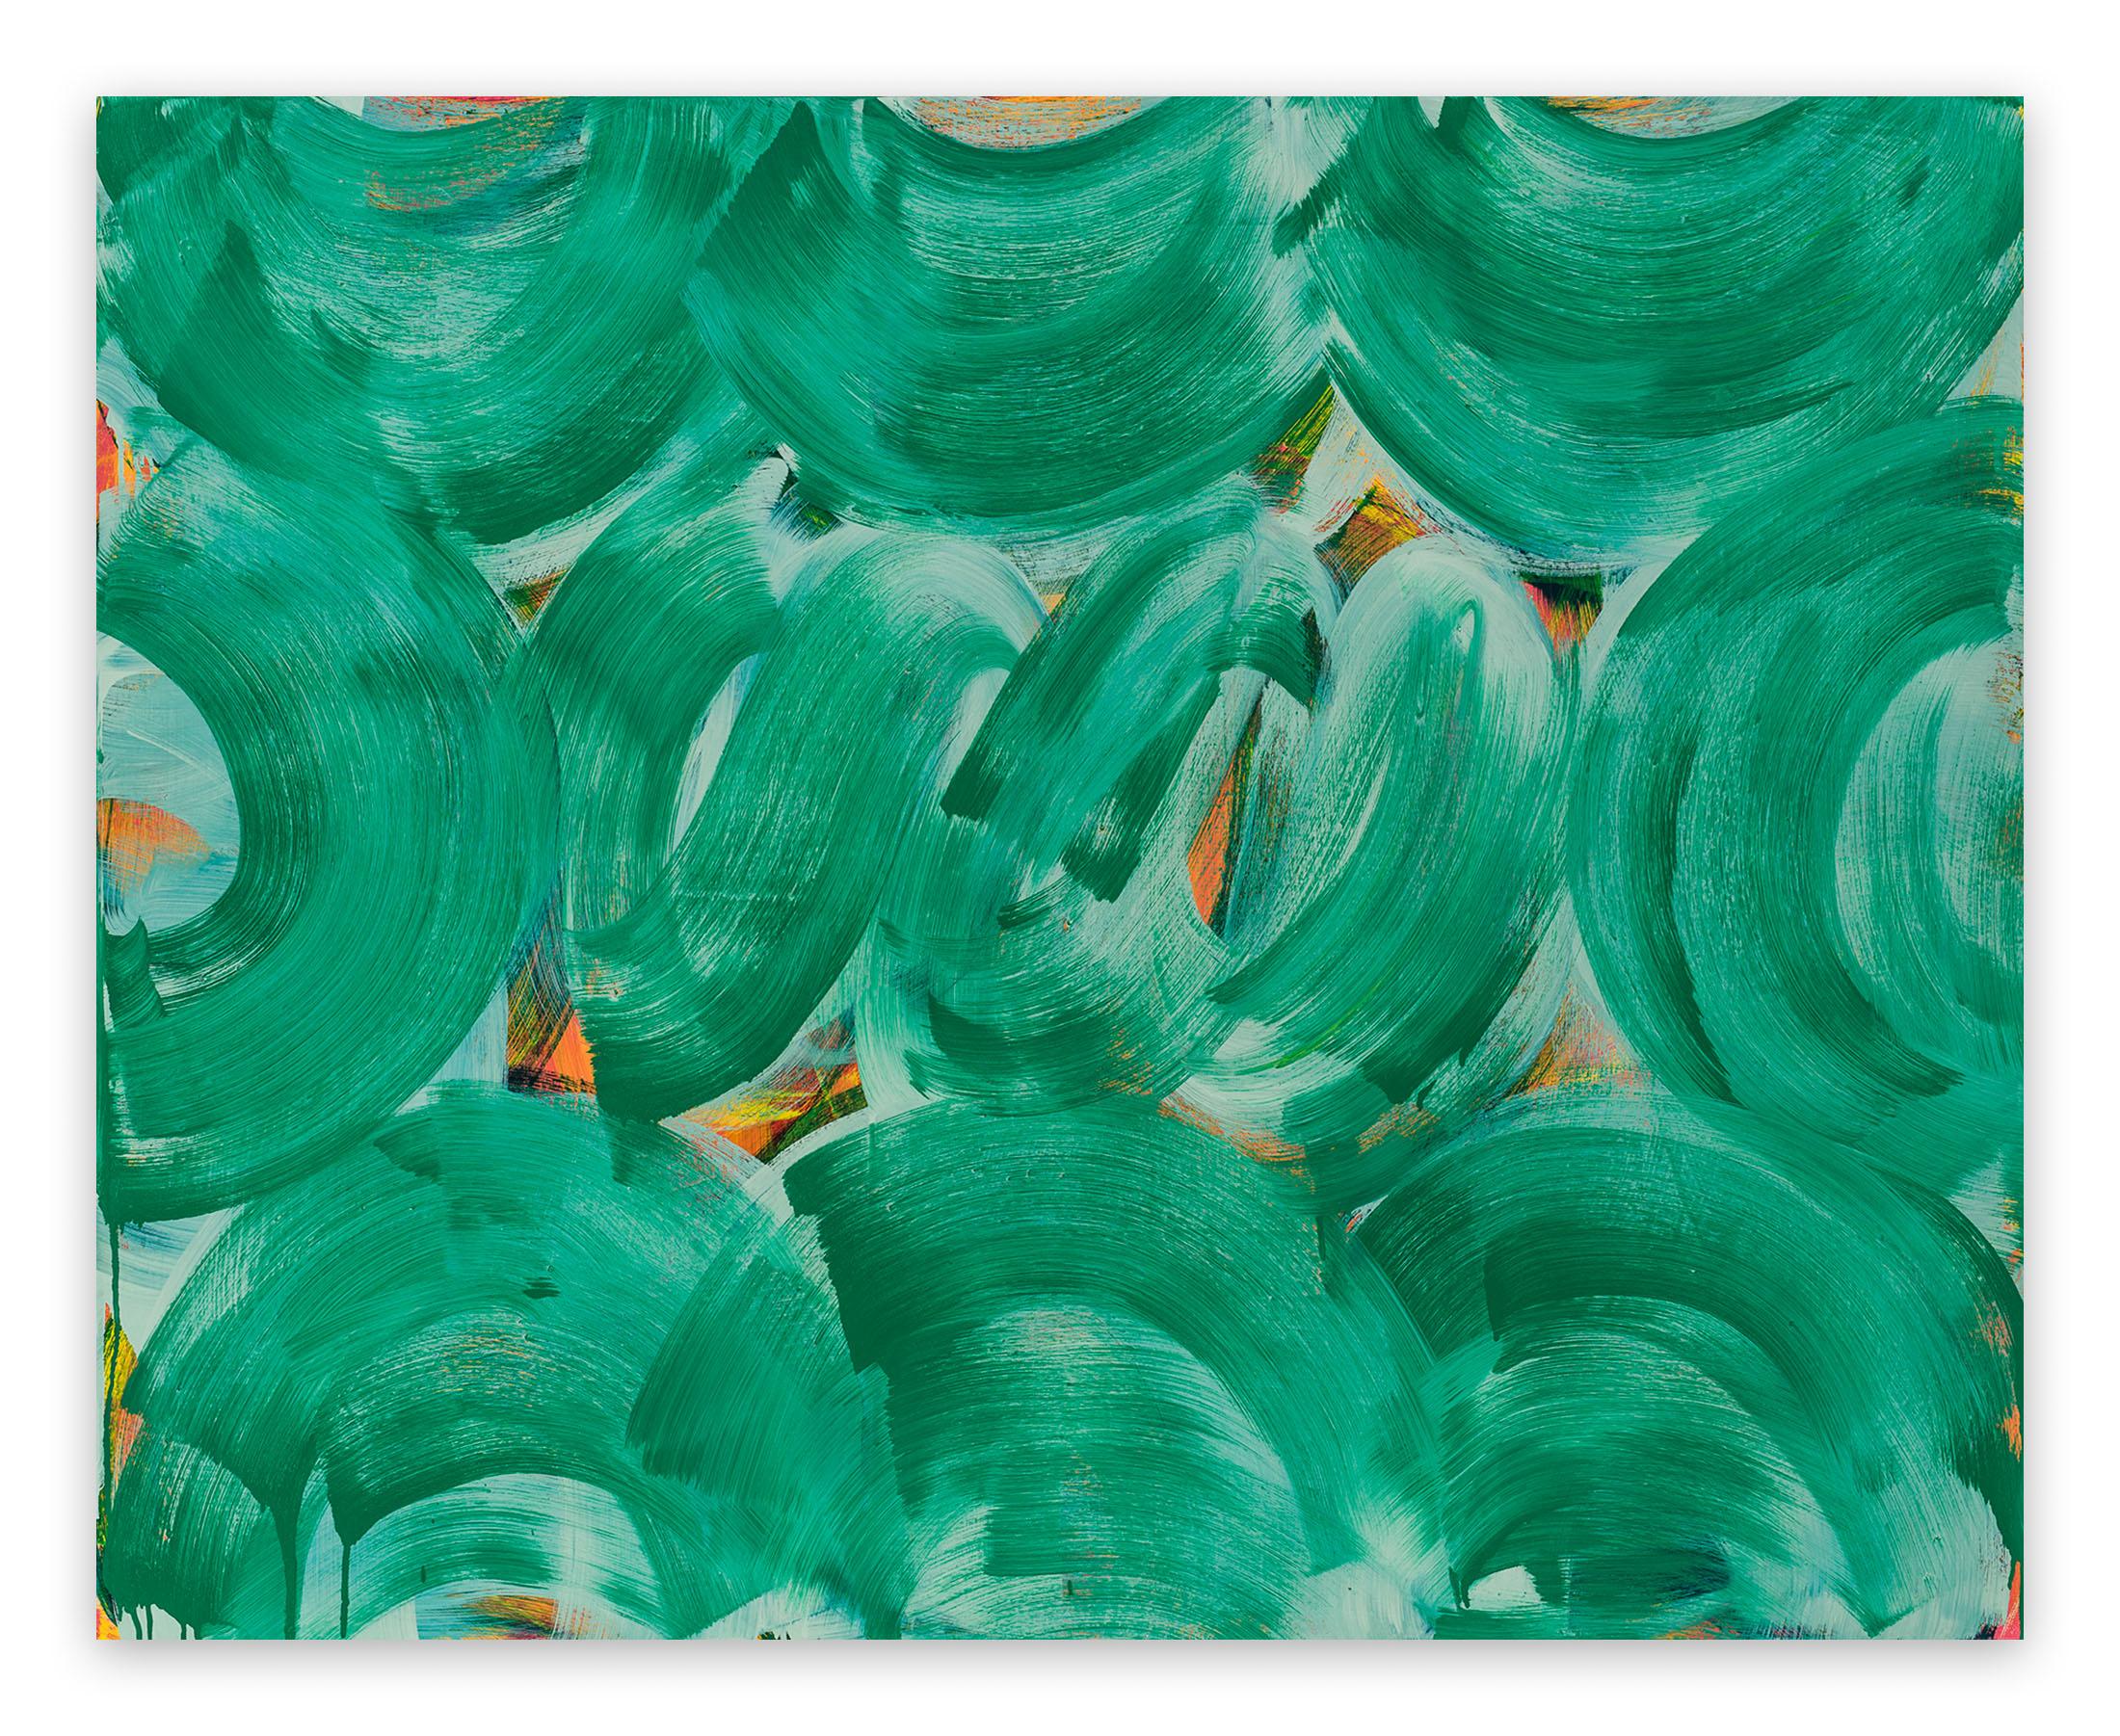 Abstract Painting Anne Russinof - Le tourbillon vert (peinture abstraite)